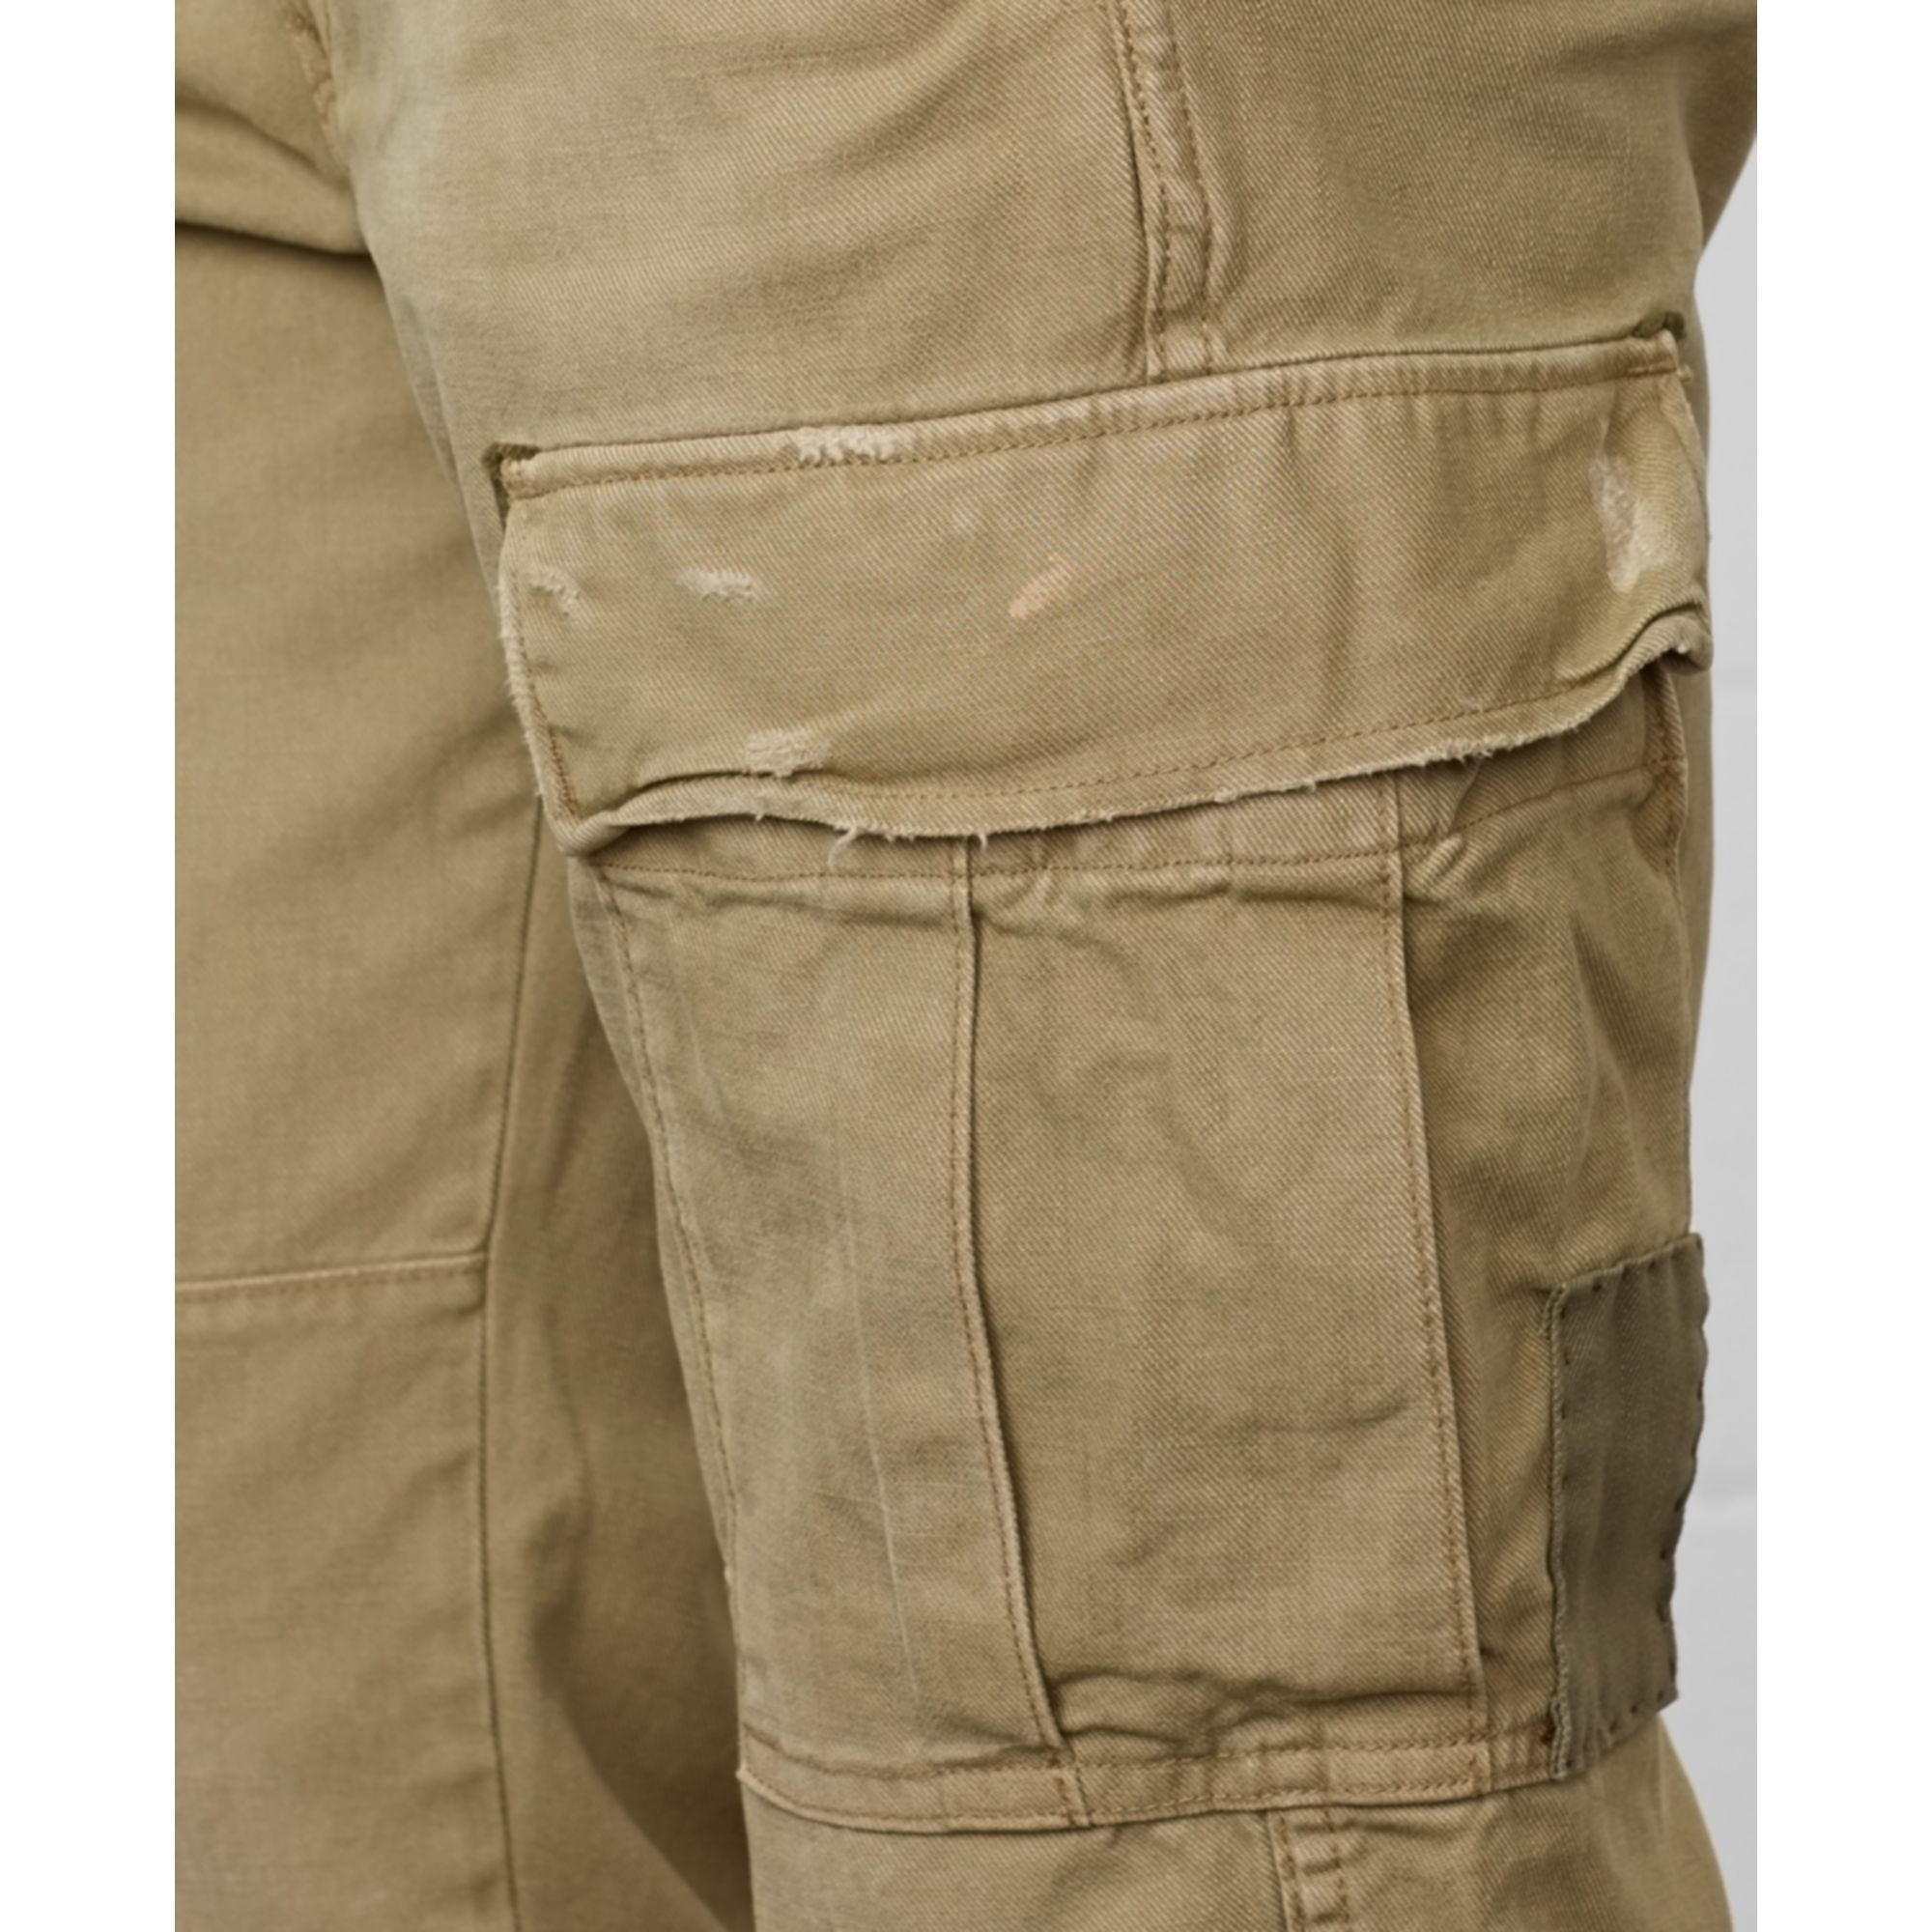 Lyst - Denim & Supply Ralph Lauren Tapered Cotton Cargo Pants in Green ...